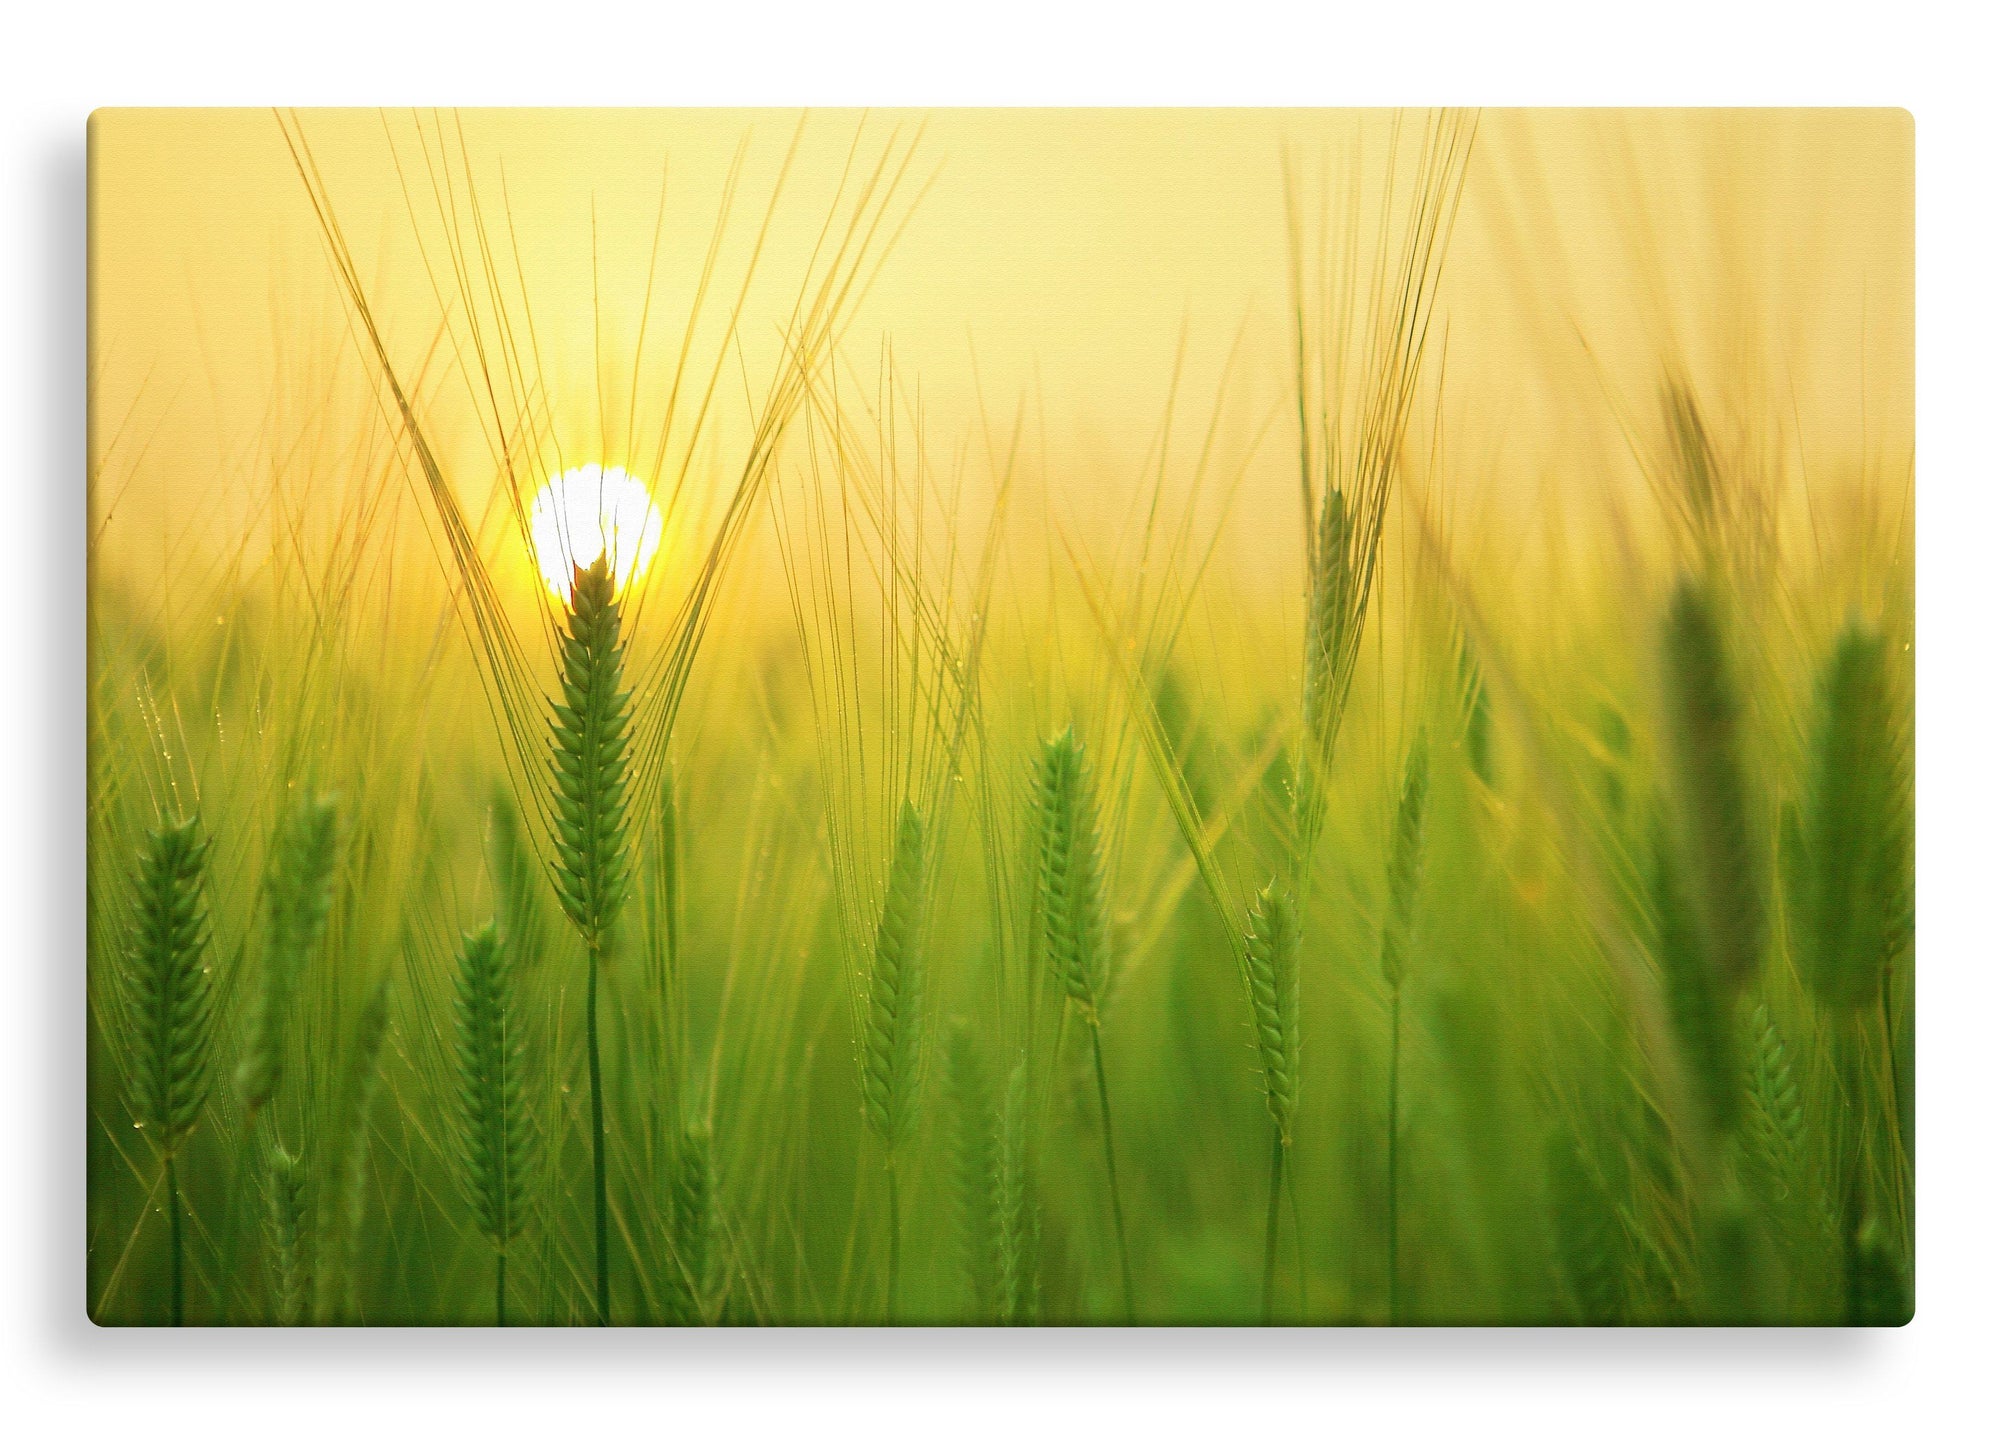 Barley Field at Sunrise